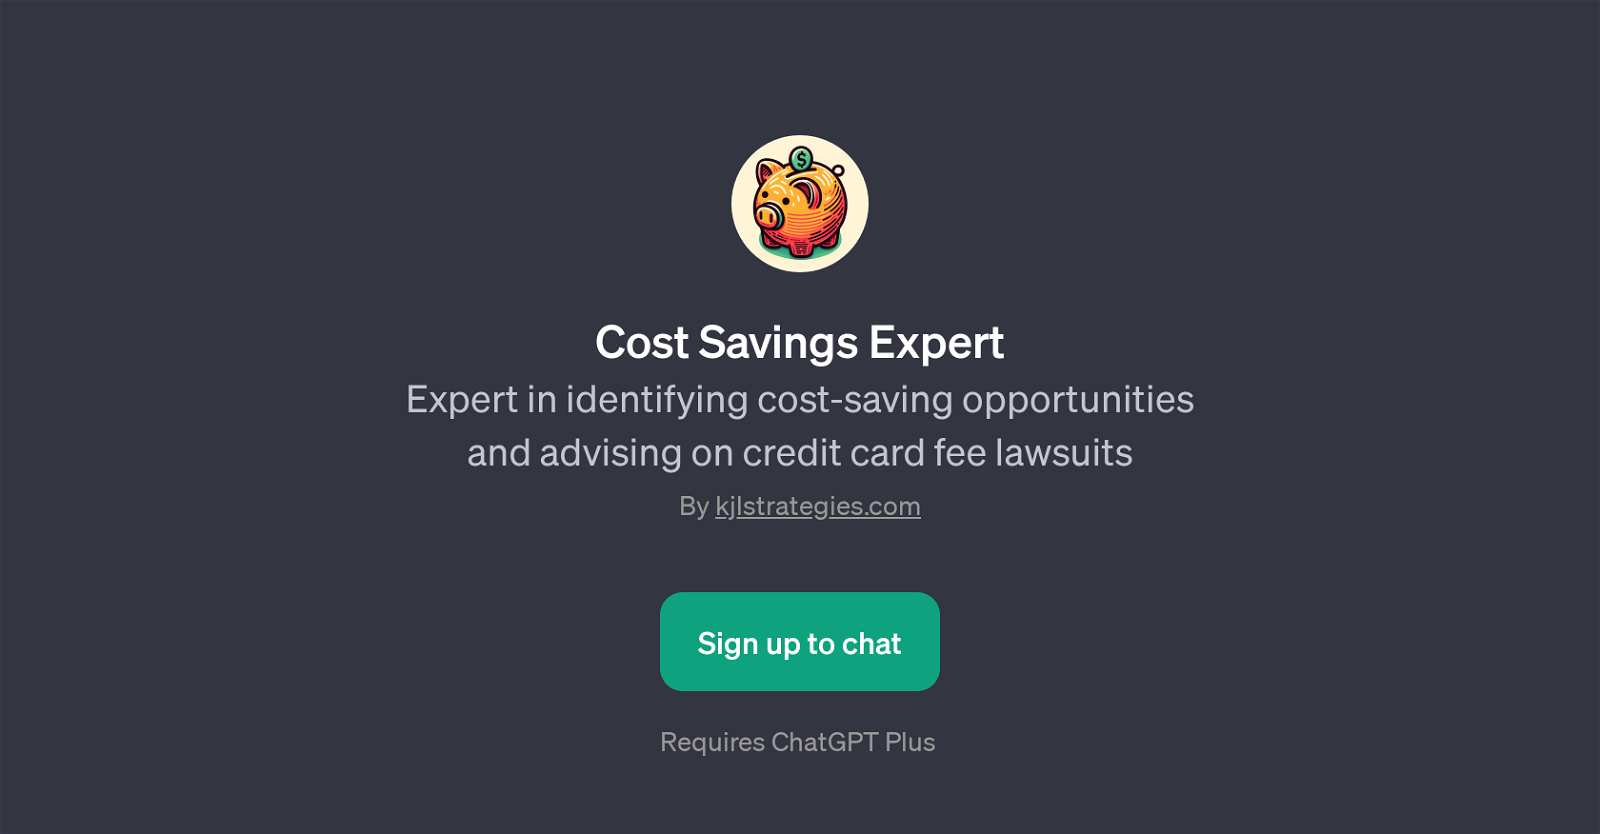 Cost Savings Expert website